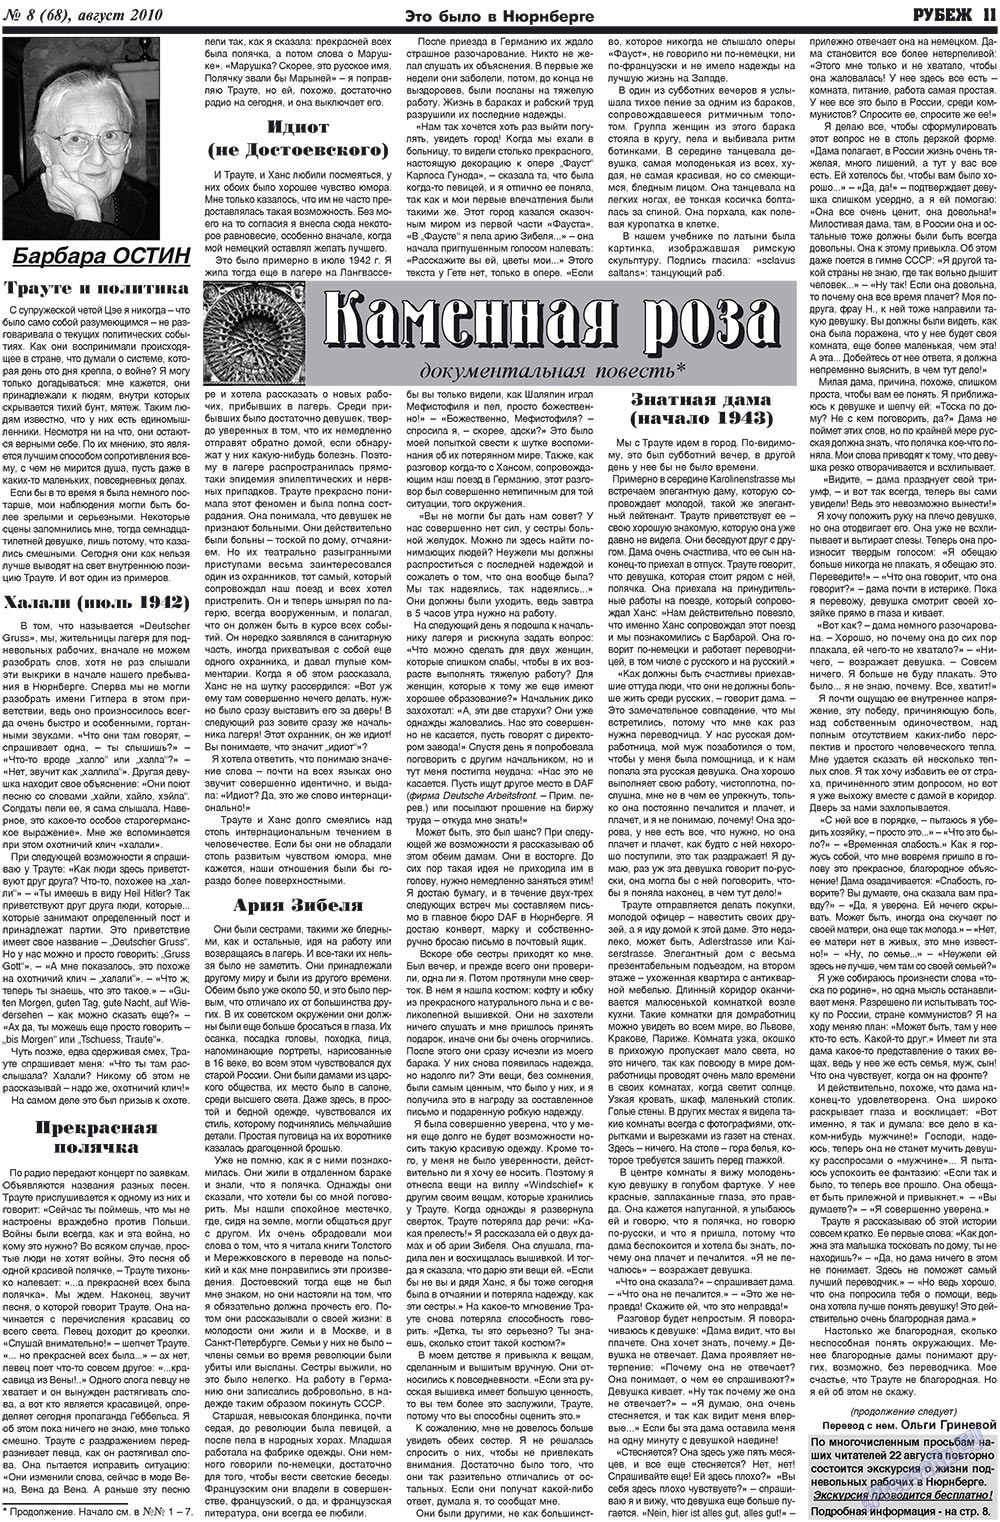 Рубеж, газета. 2010 №8 стр.11